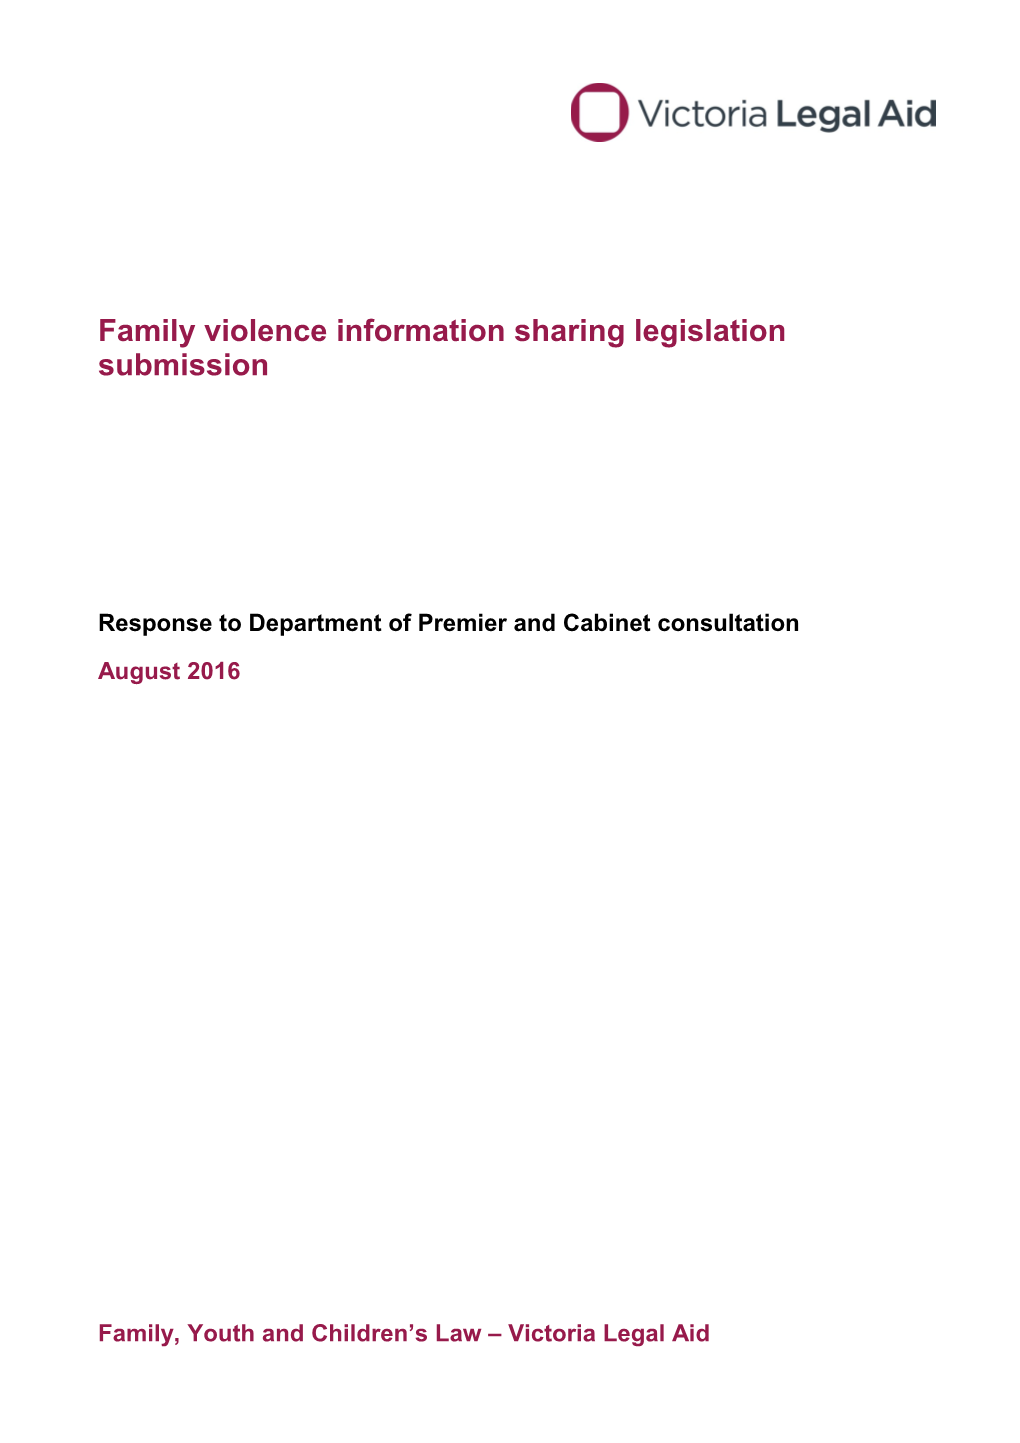 Family Violence Information Sharing Legislation Consultation Submission